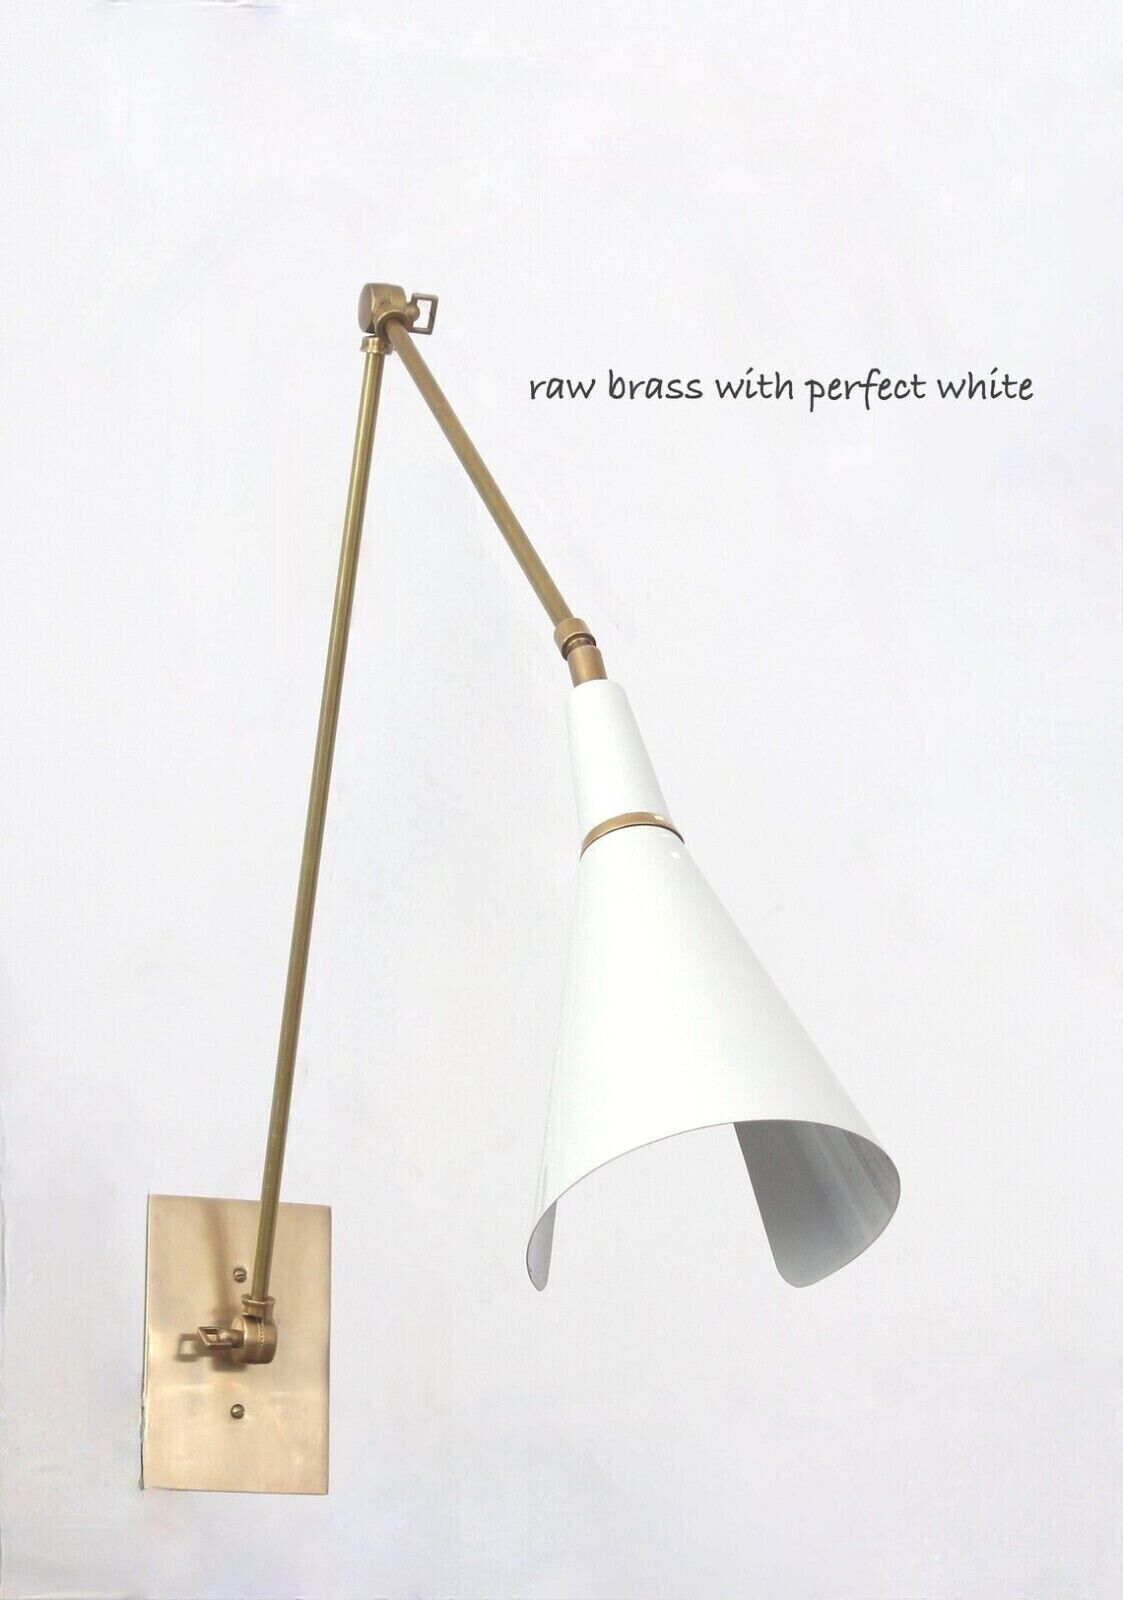 SCICCOSO Adjustable Raw Brass Wall Light - Stilnovo Mid Century White Wall Lamp